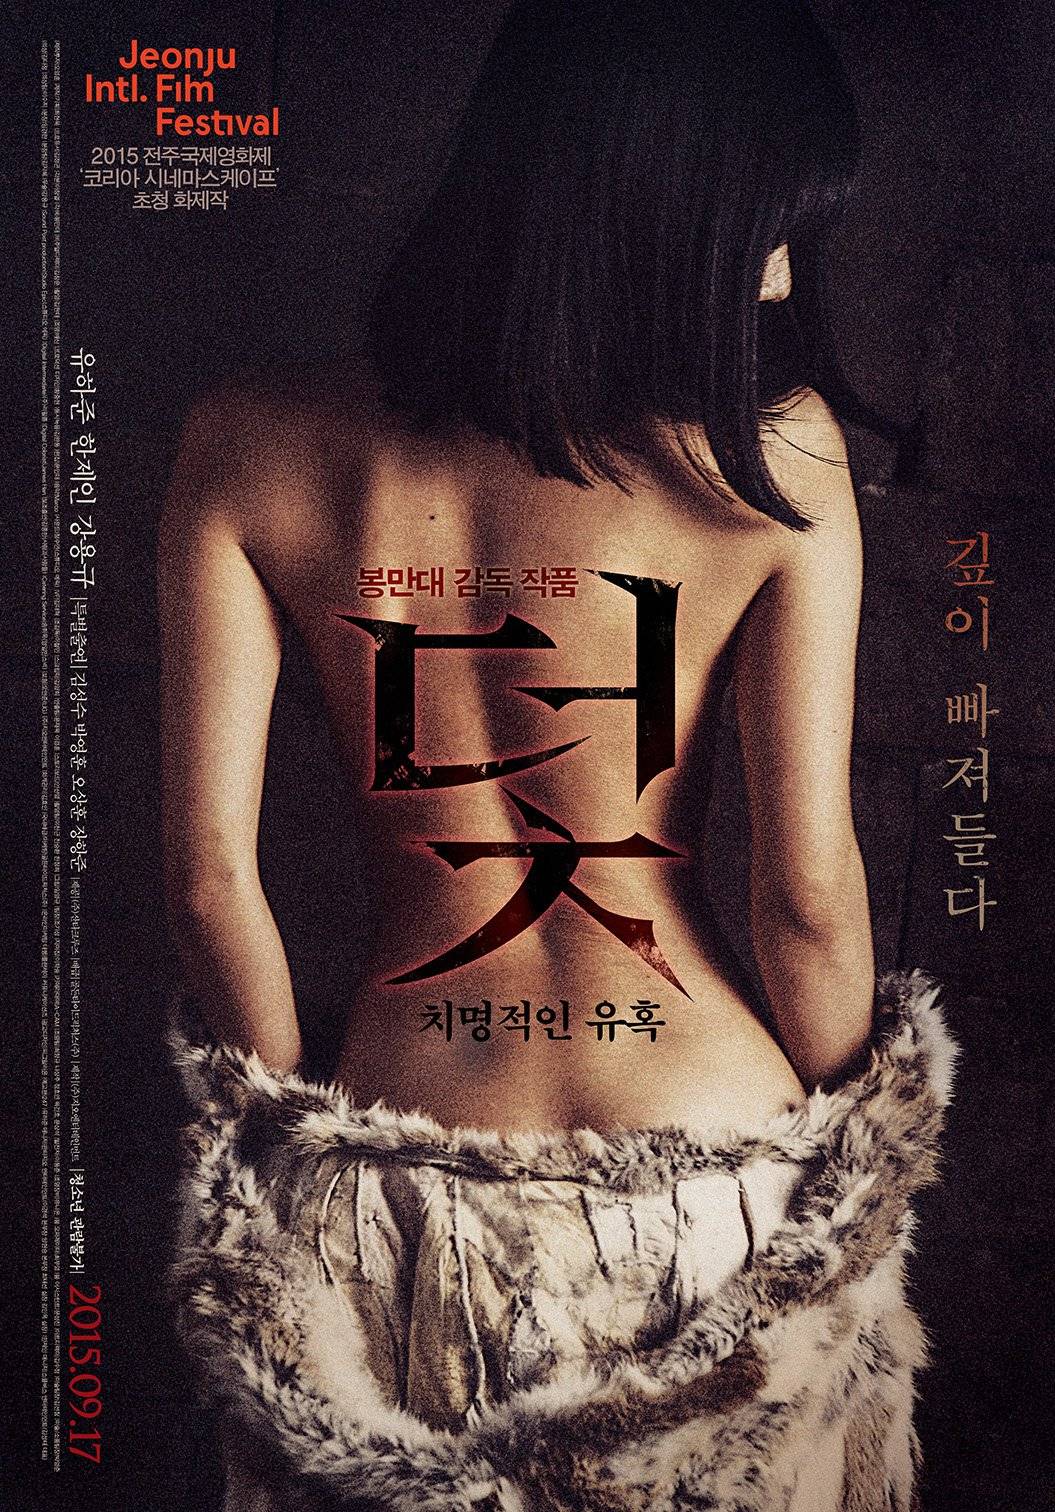 Yoo In Na Porn Videos - Korean movies opening today 2015/09/17 in Korea @ HanCinema